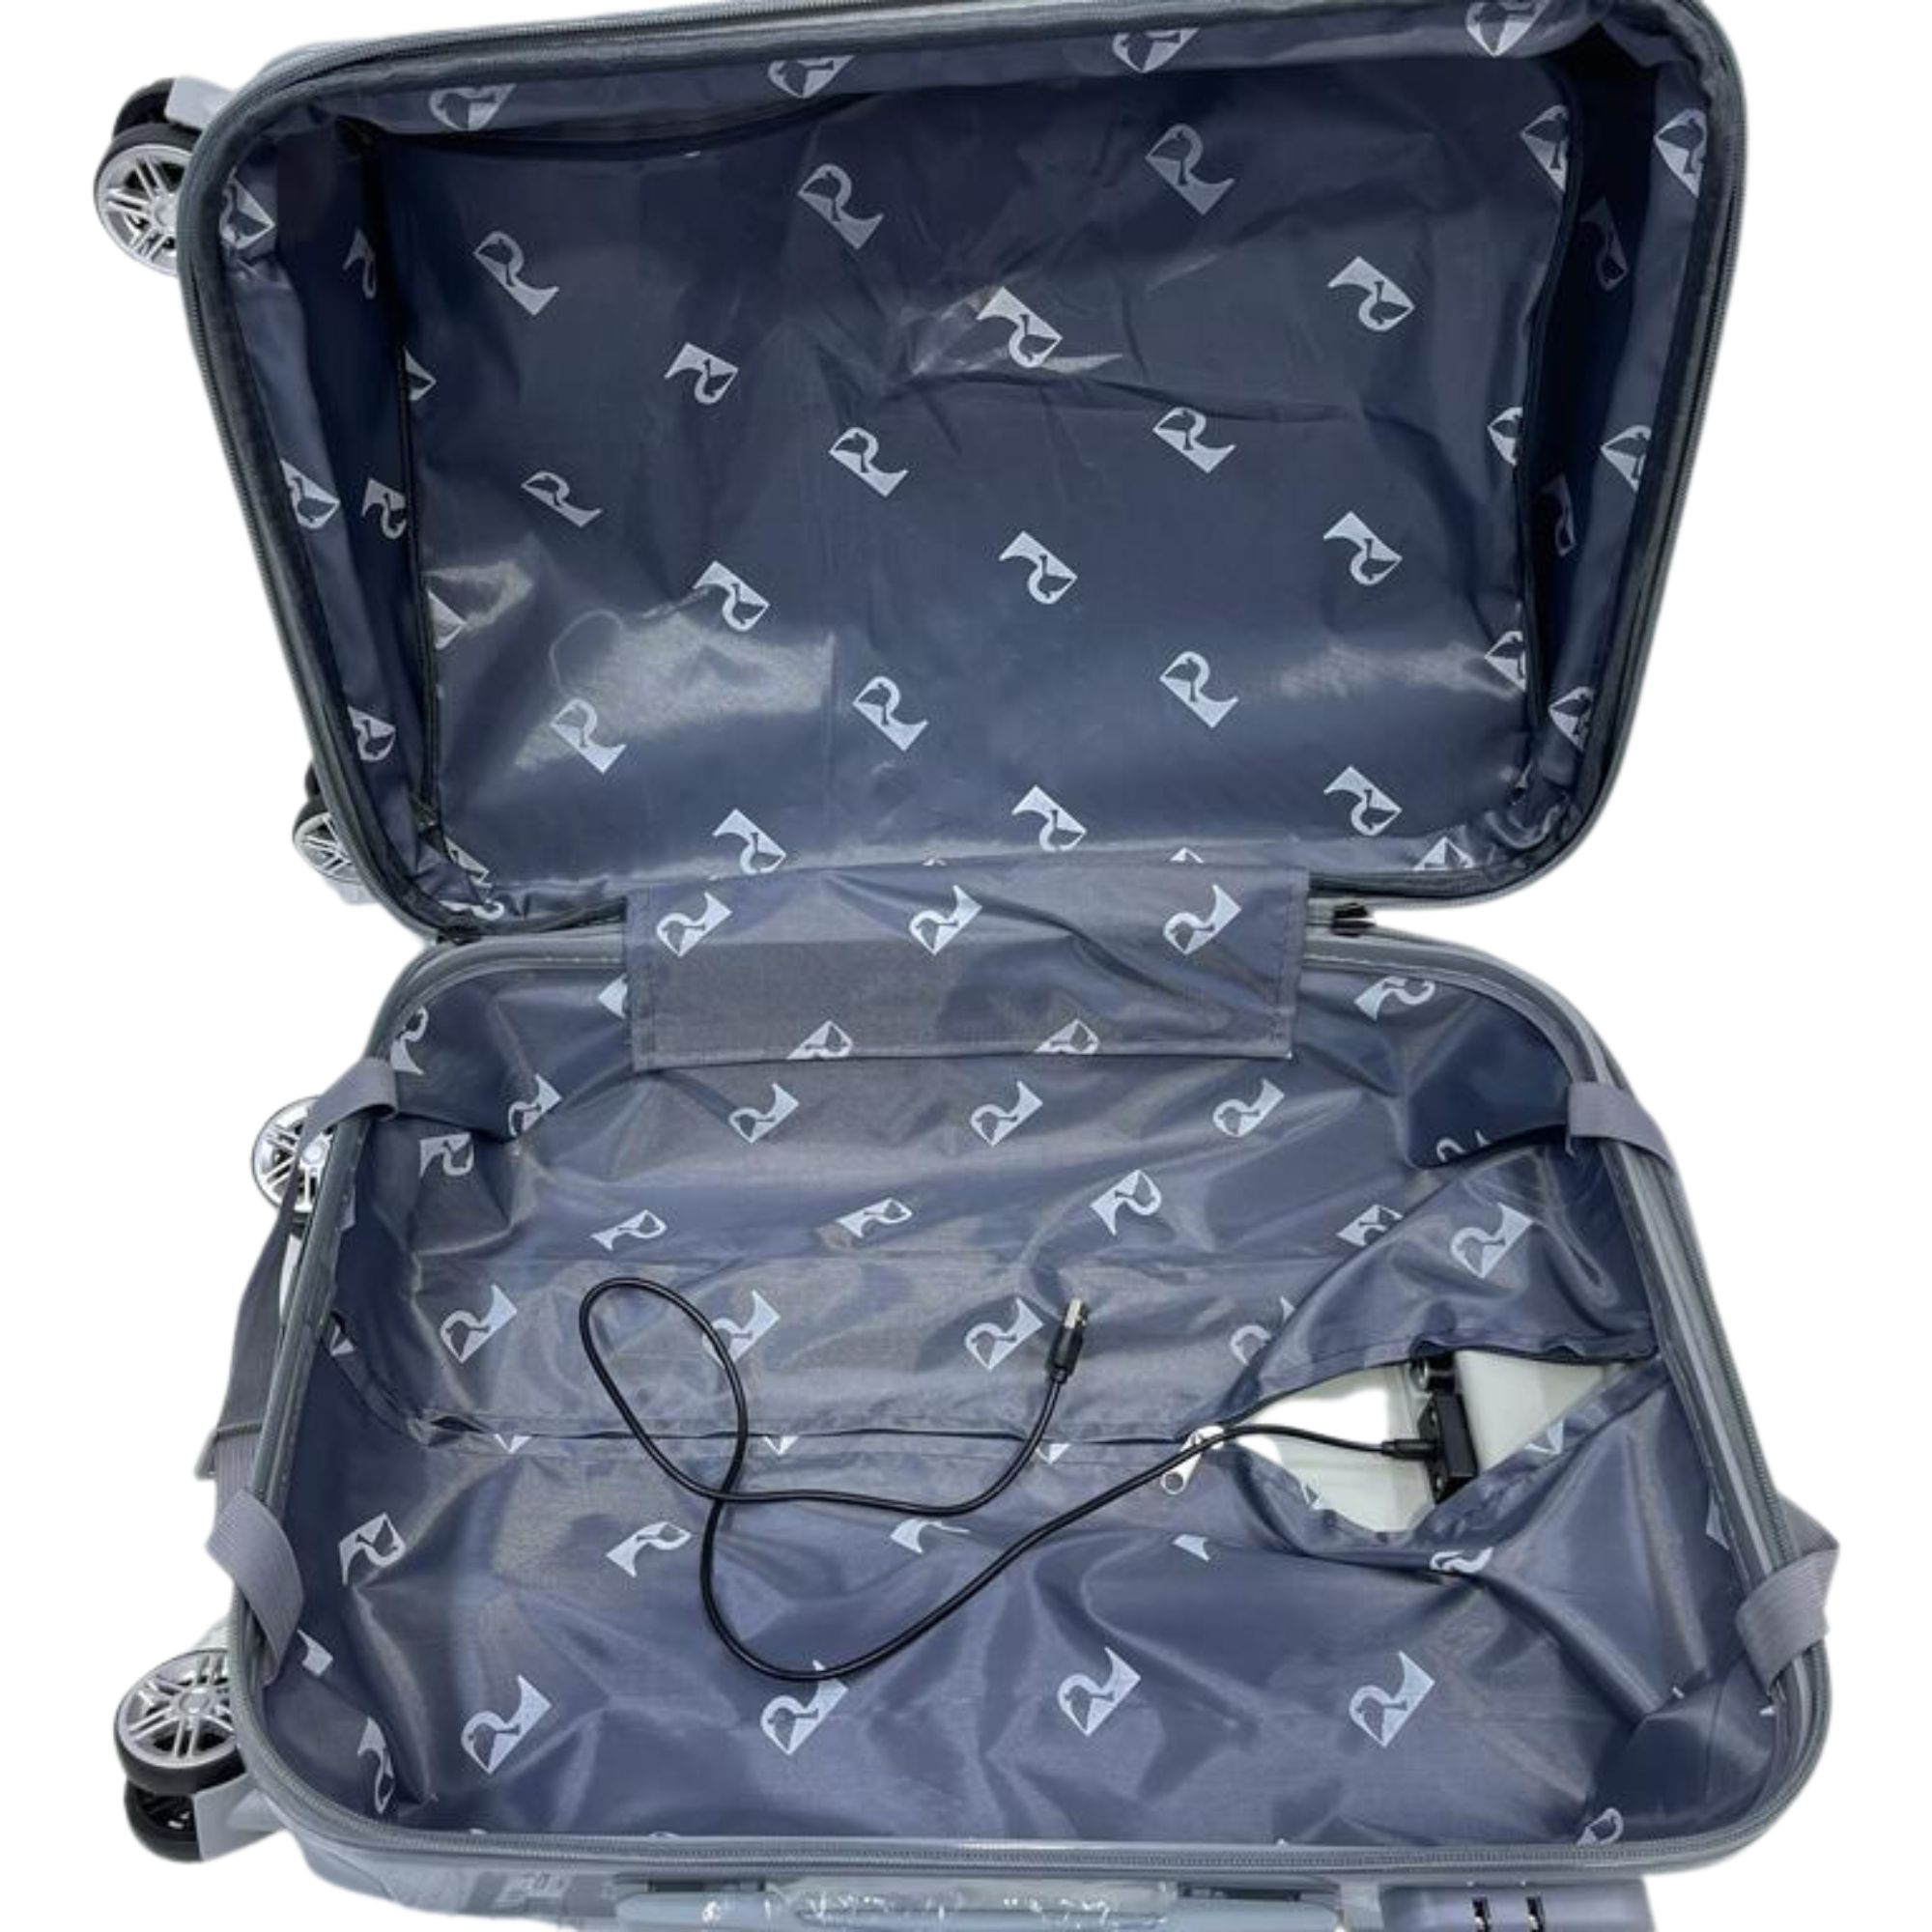 Pigeon PC Luggage Set